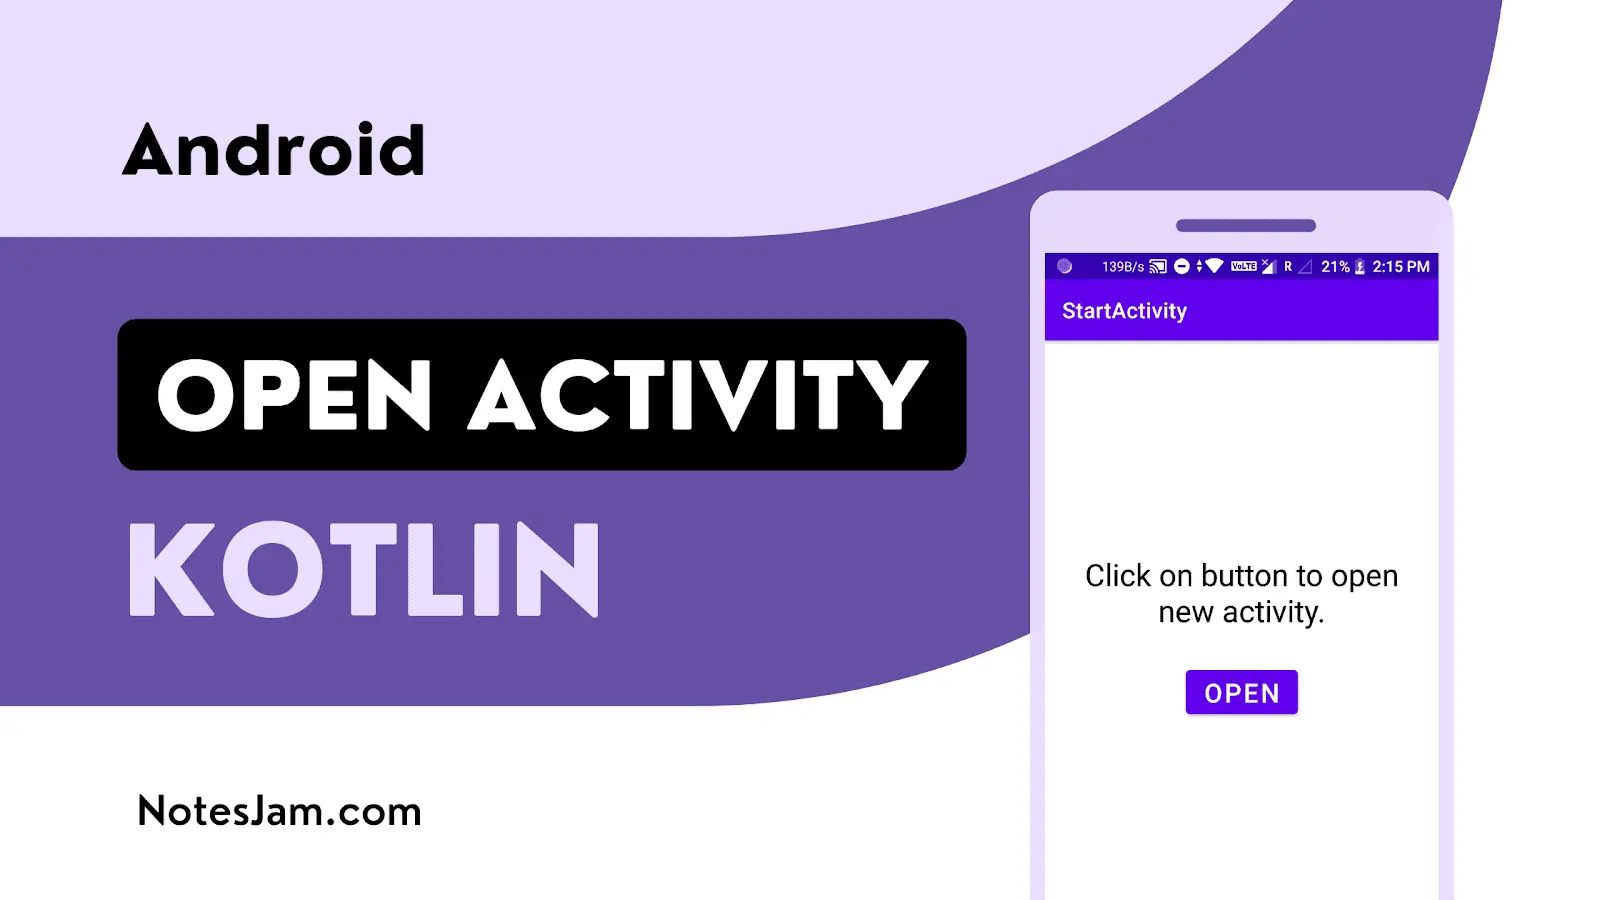 Start activity on button click